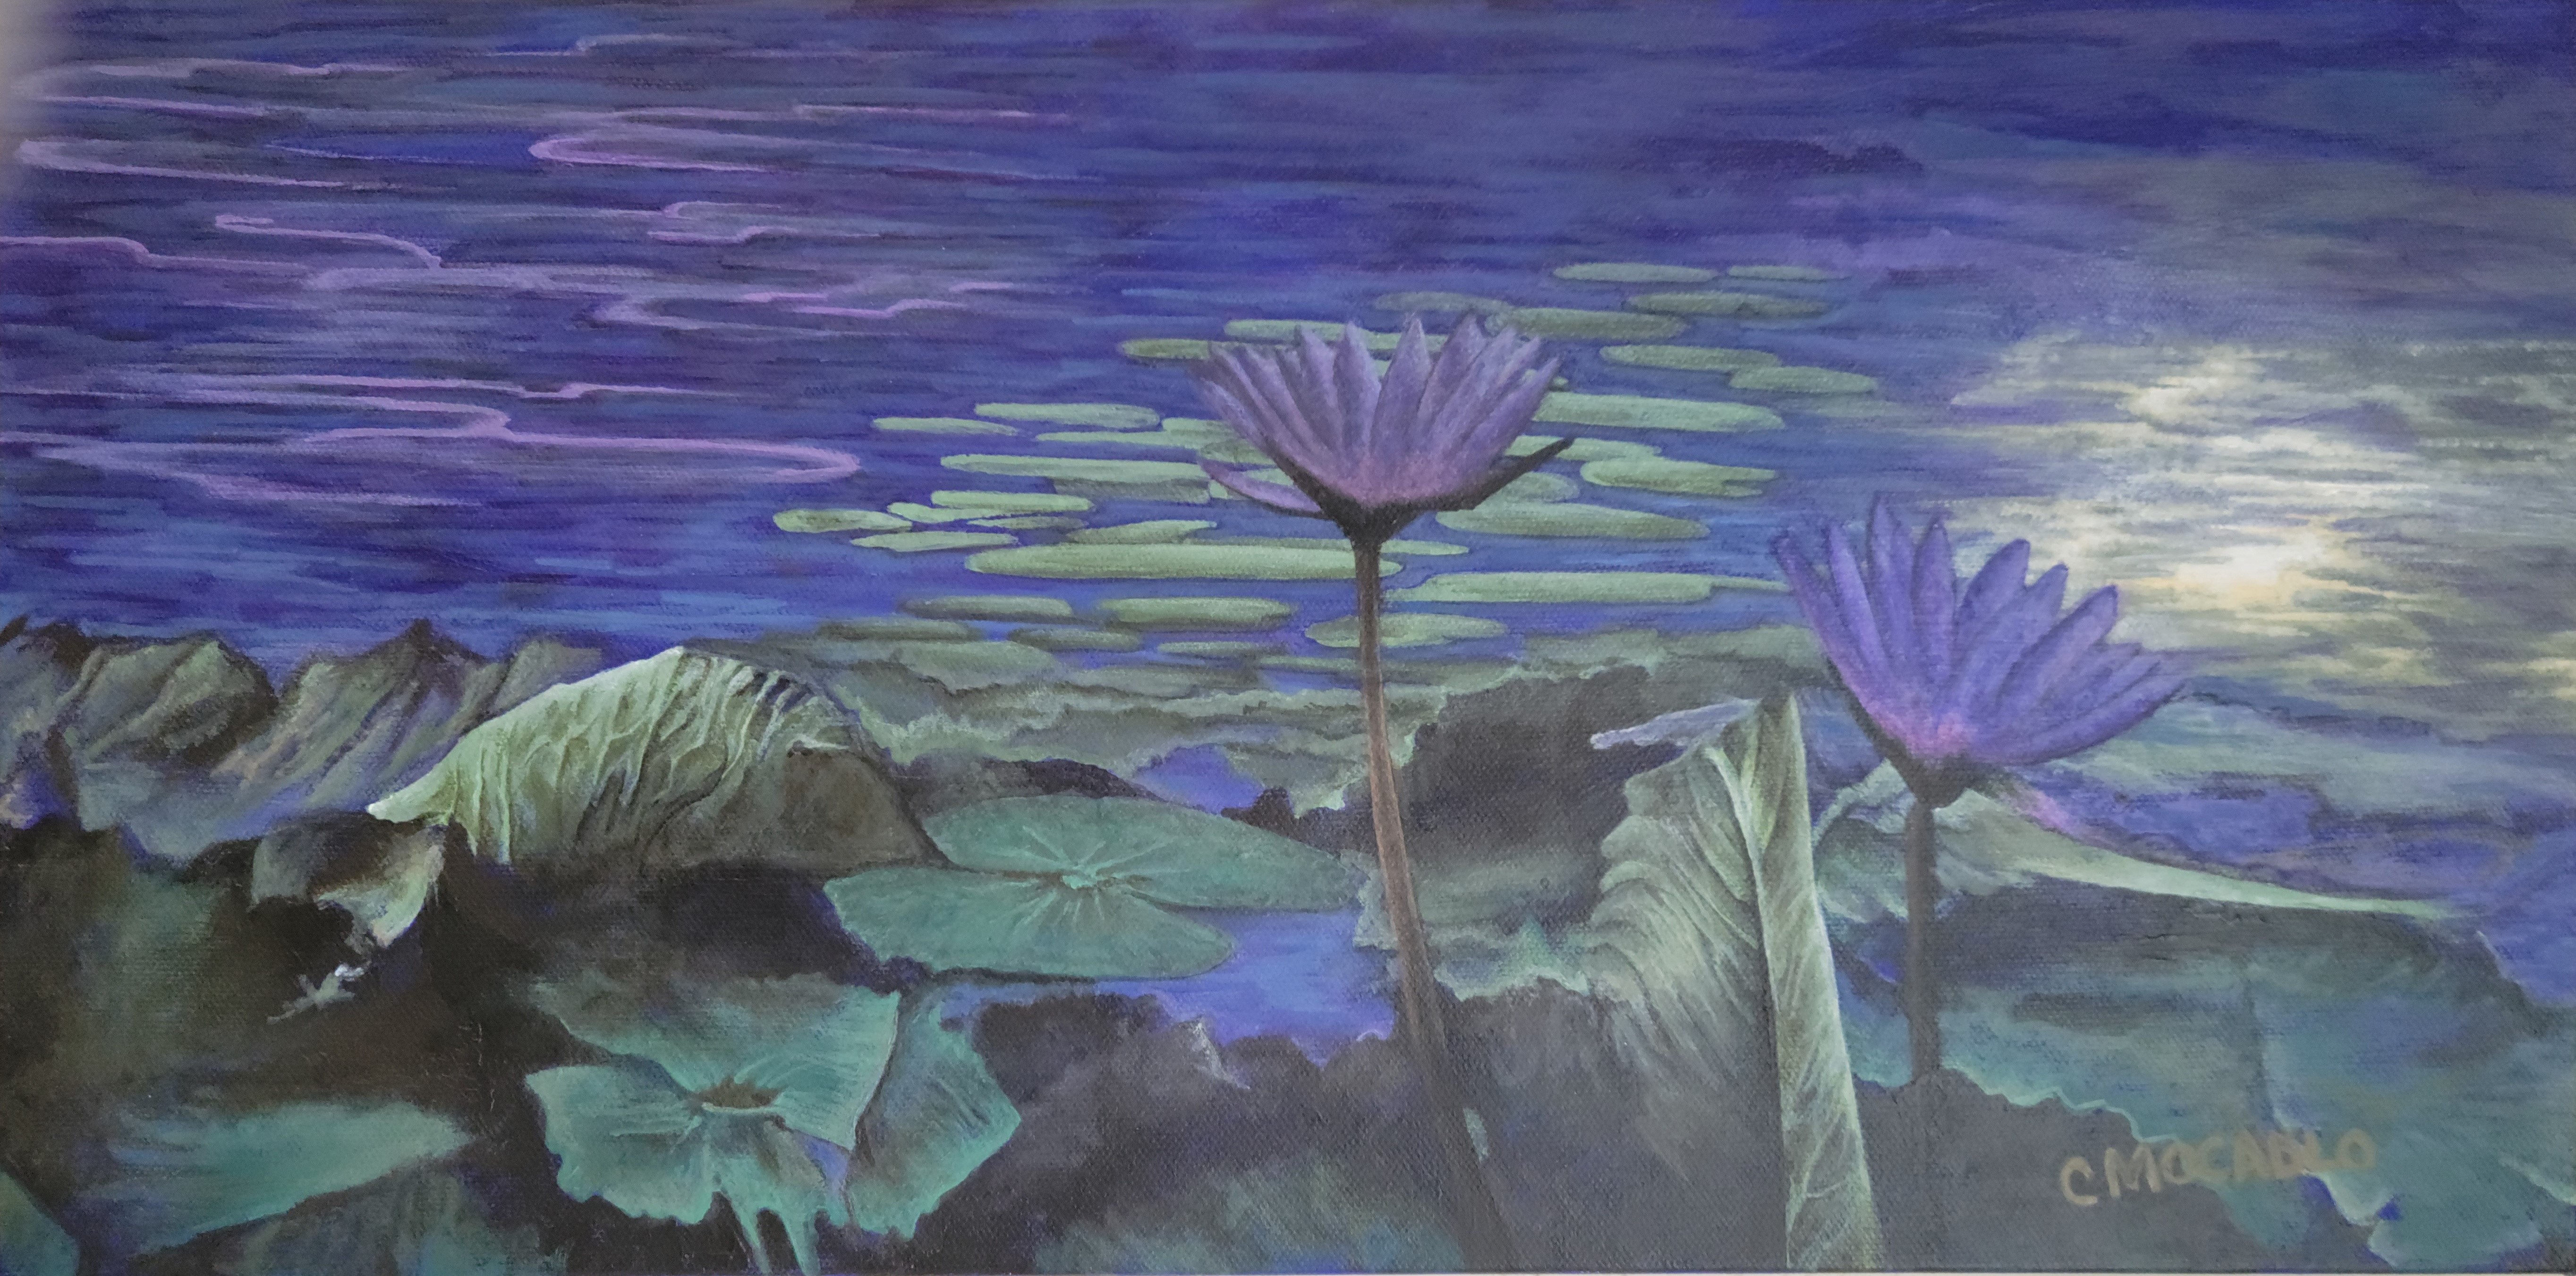 painting depicting water lotuses at dusk in dark blue and purple tones